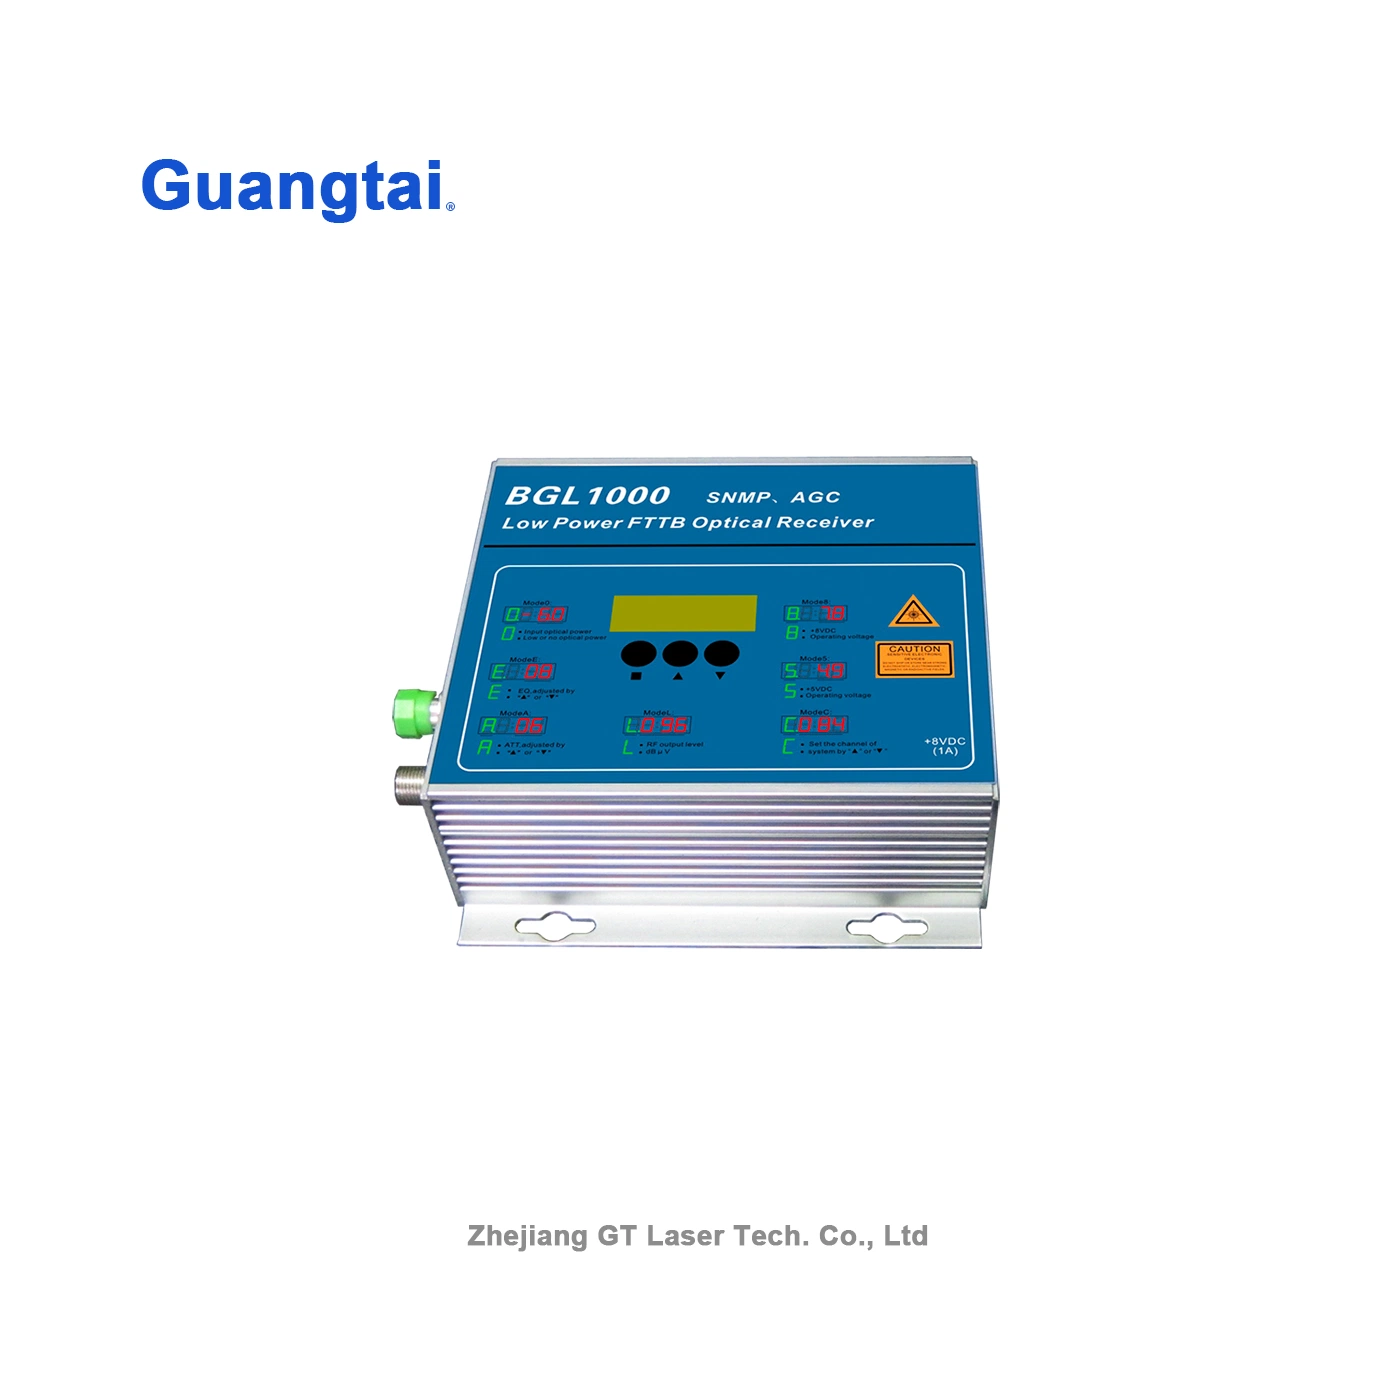 Guangtai Low Power Snmp FTTB AGC CATV Optical Receiver Bgl1000